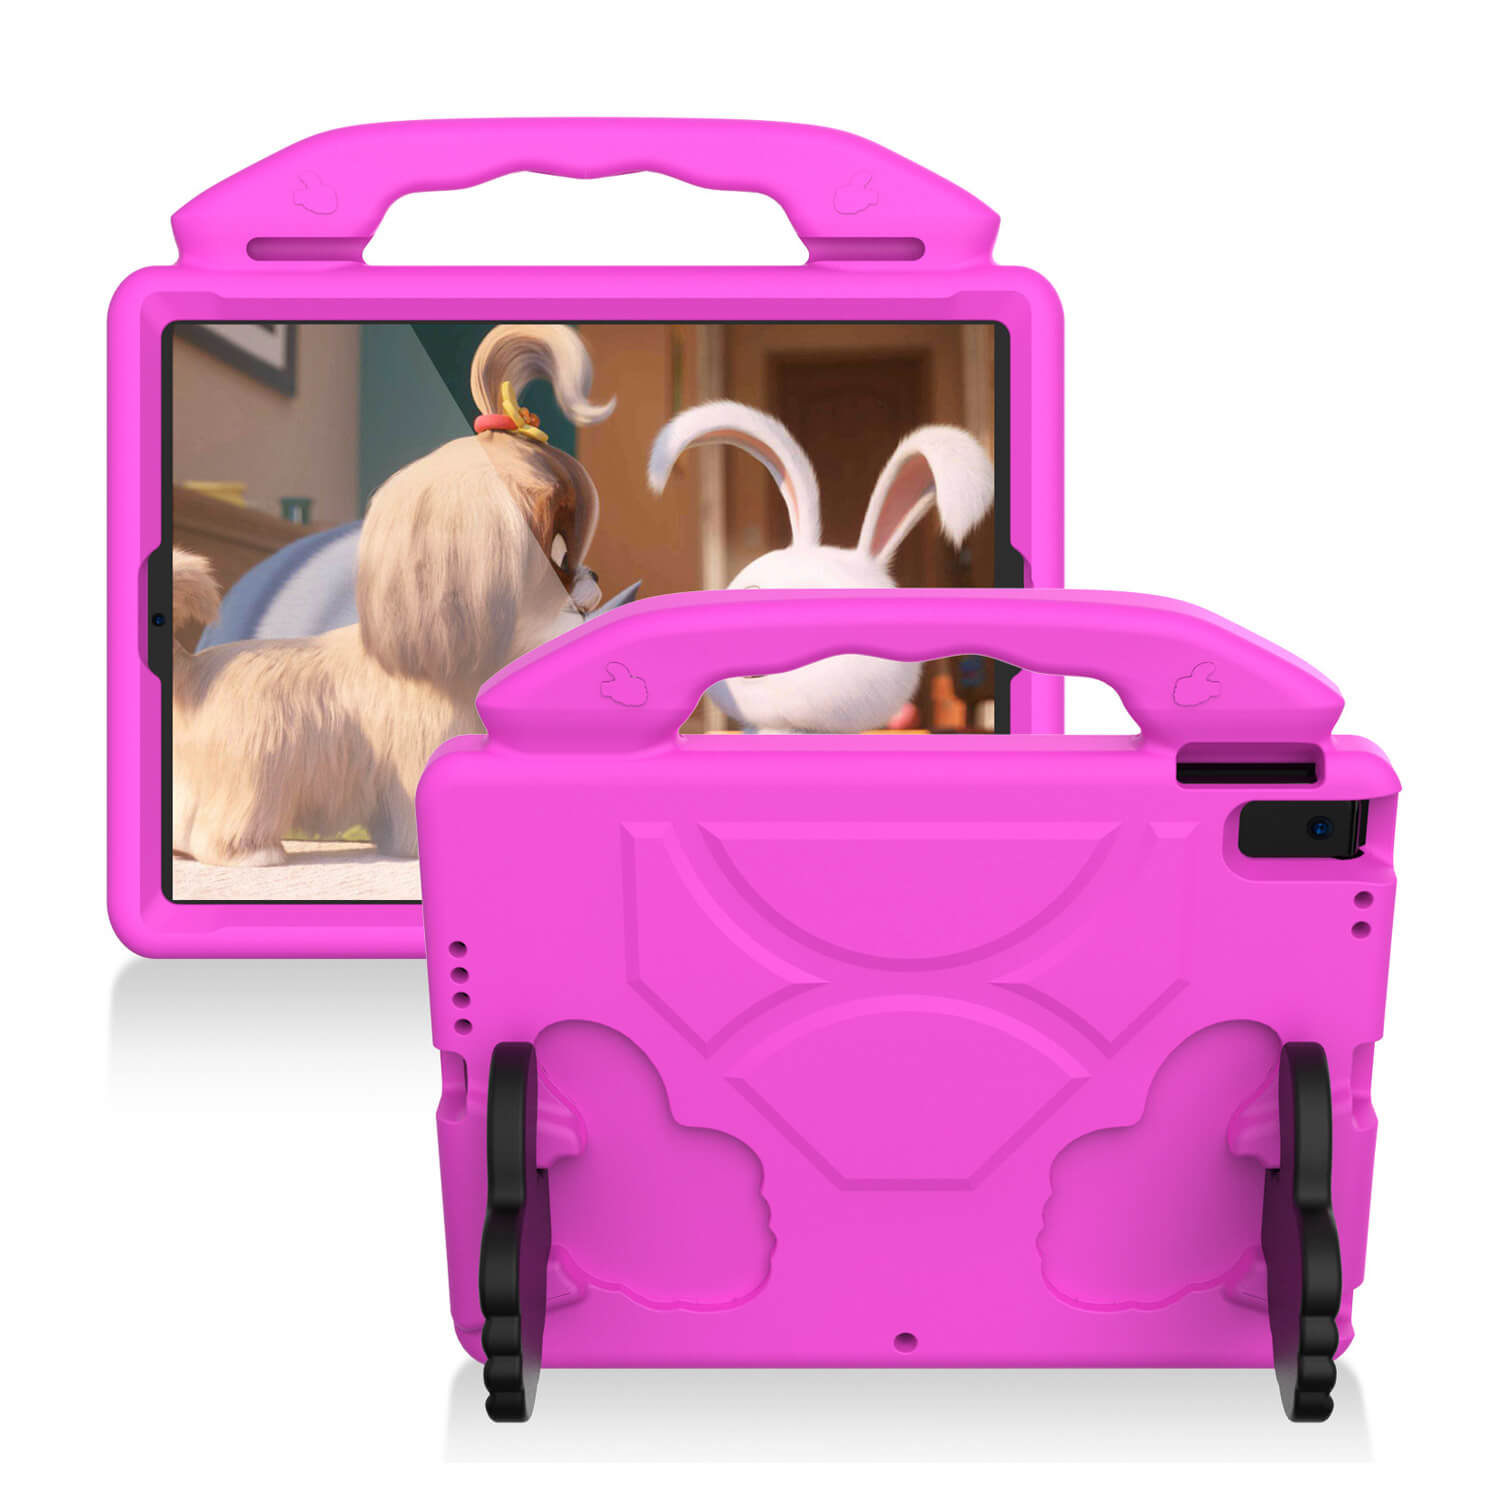 Tough On iPad 5 / 6th Gen 9.7" Case EVA Kids Protection Hot Pink